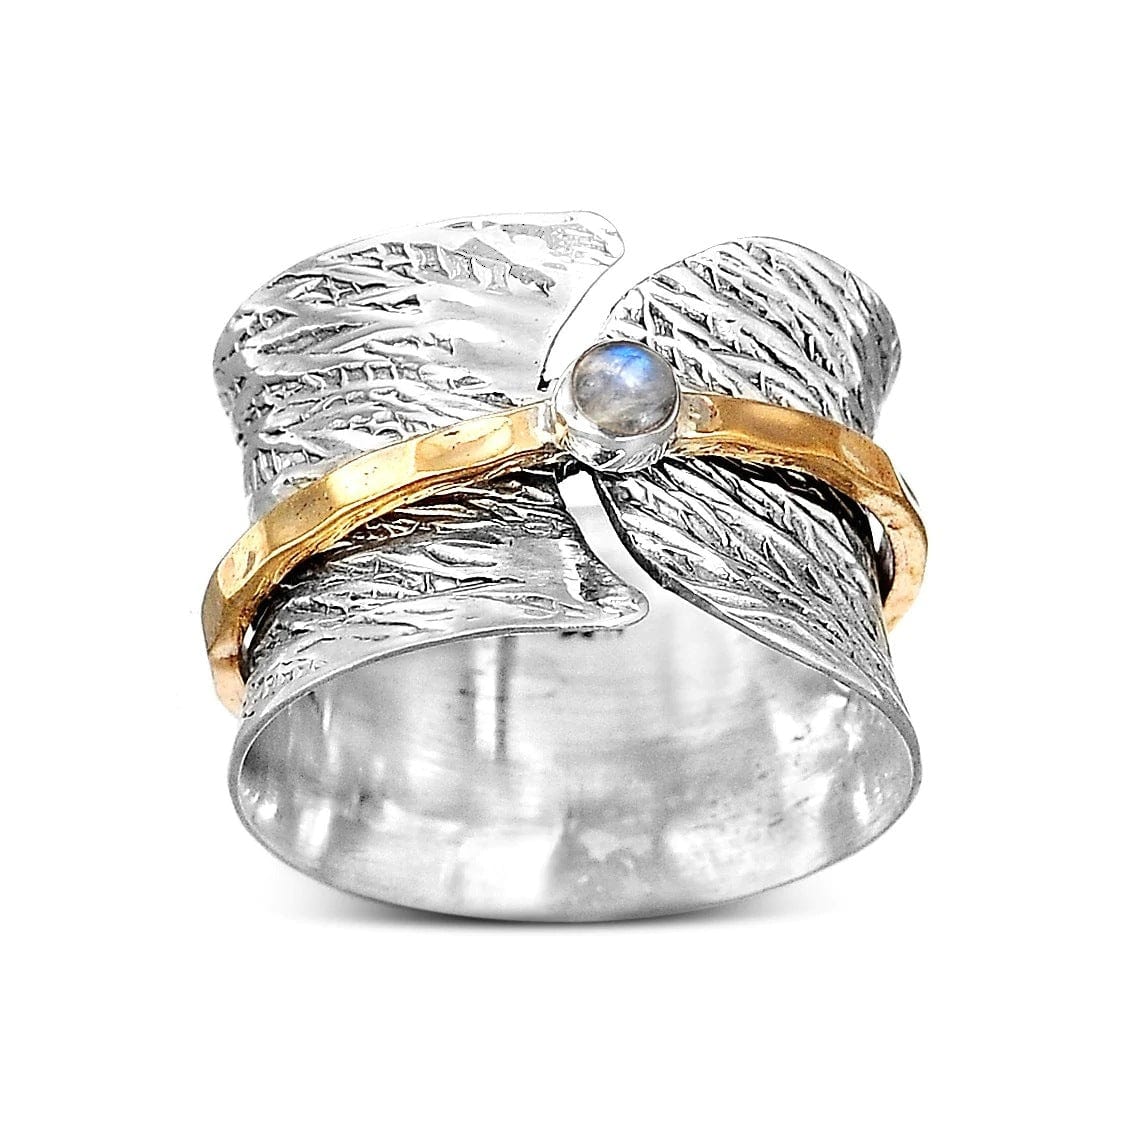 Sterling Silver - Golden Opalite Fidget Anxiety Ring